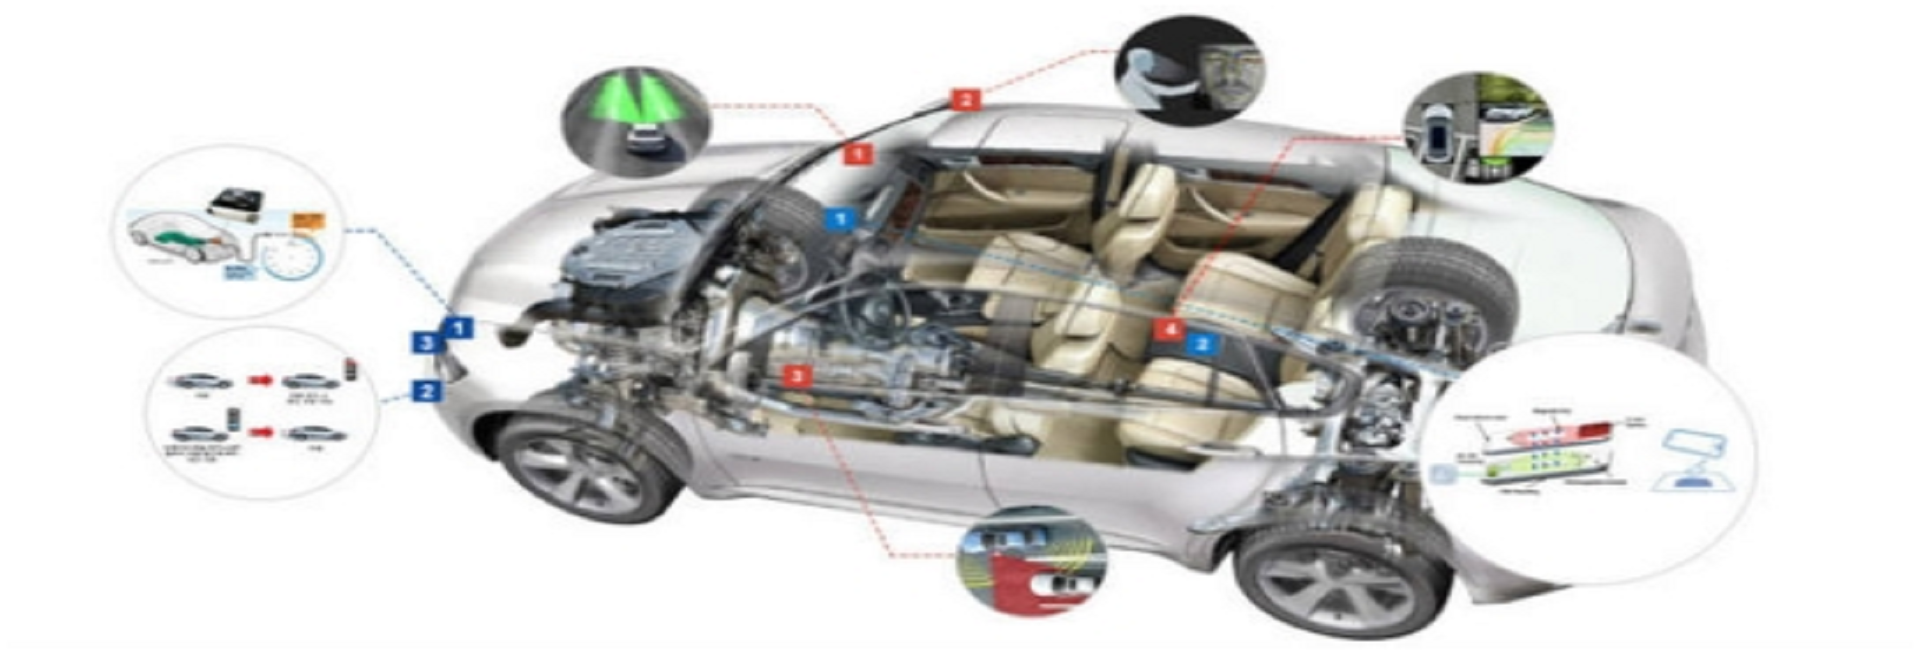 Automotive Electronic Components